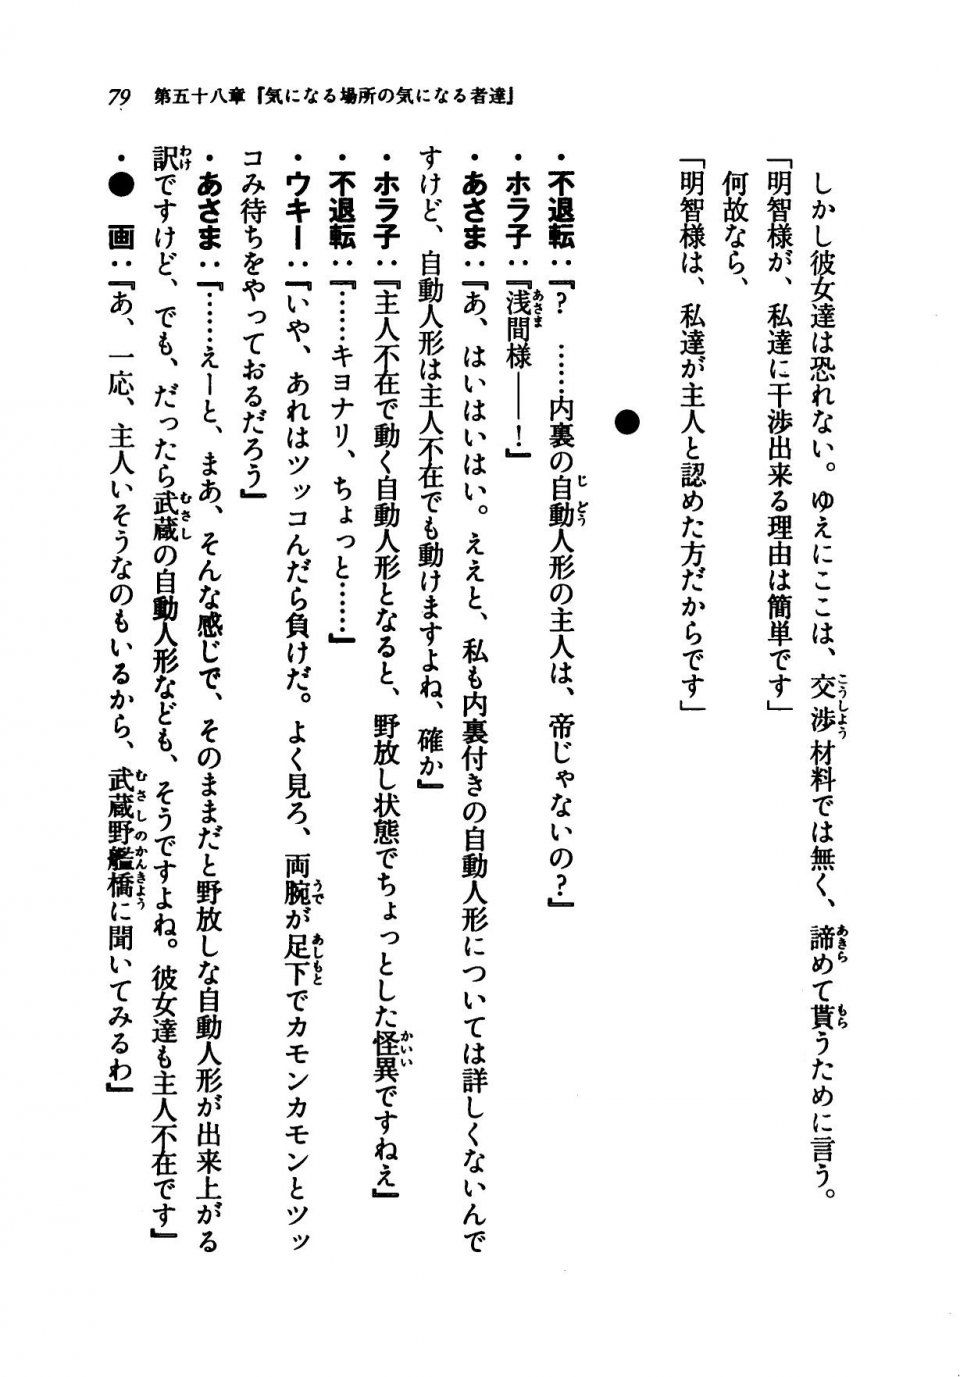 Kyoukai Senjou no Horizon LN Vol 21(8C) Part 1 - Photo #78